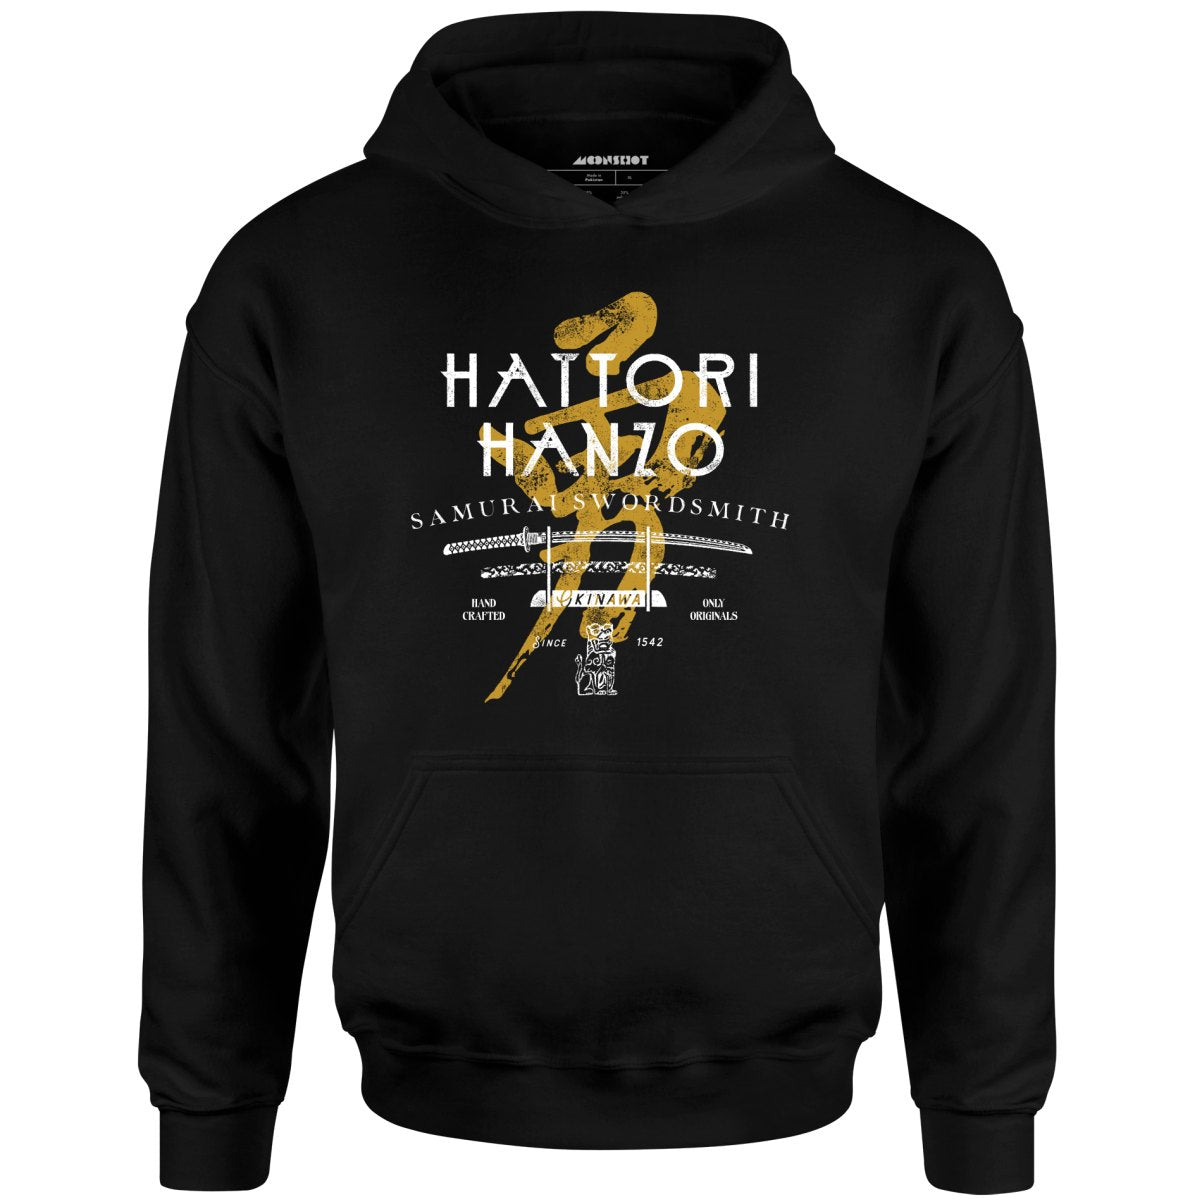 Hattori Hanzo Samurai Swordsmith - Unisex Hoodie